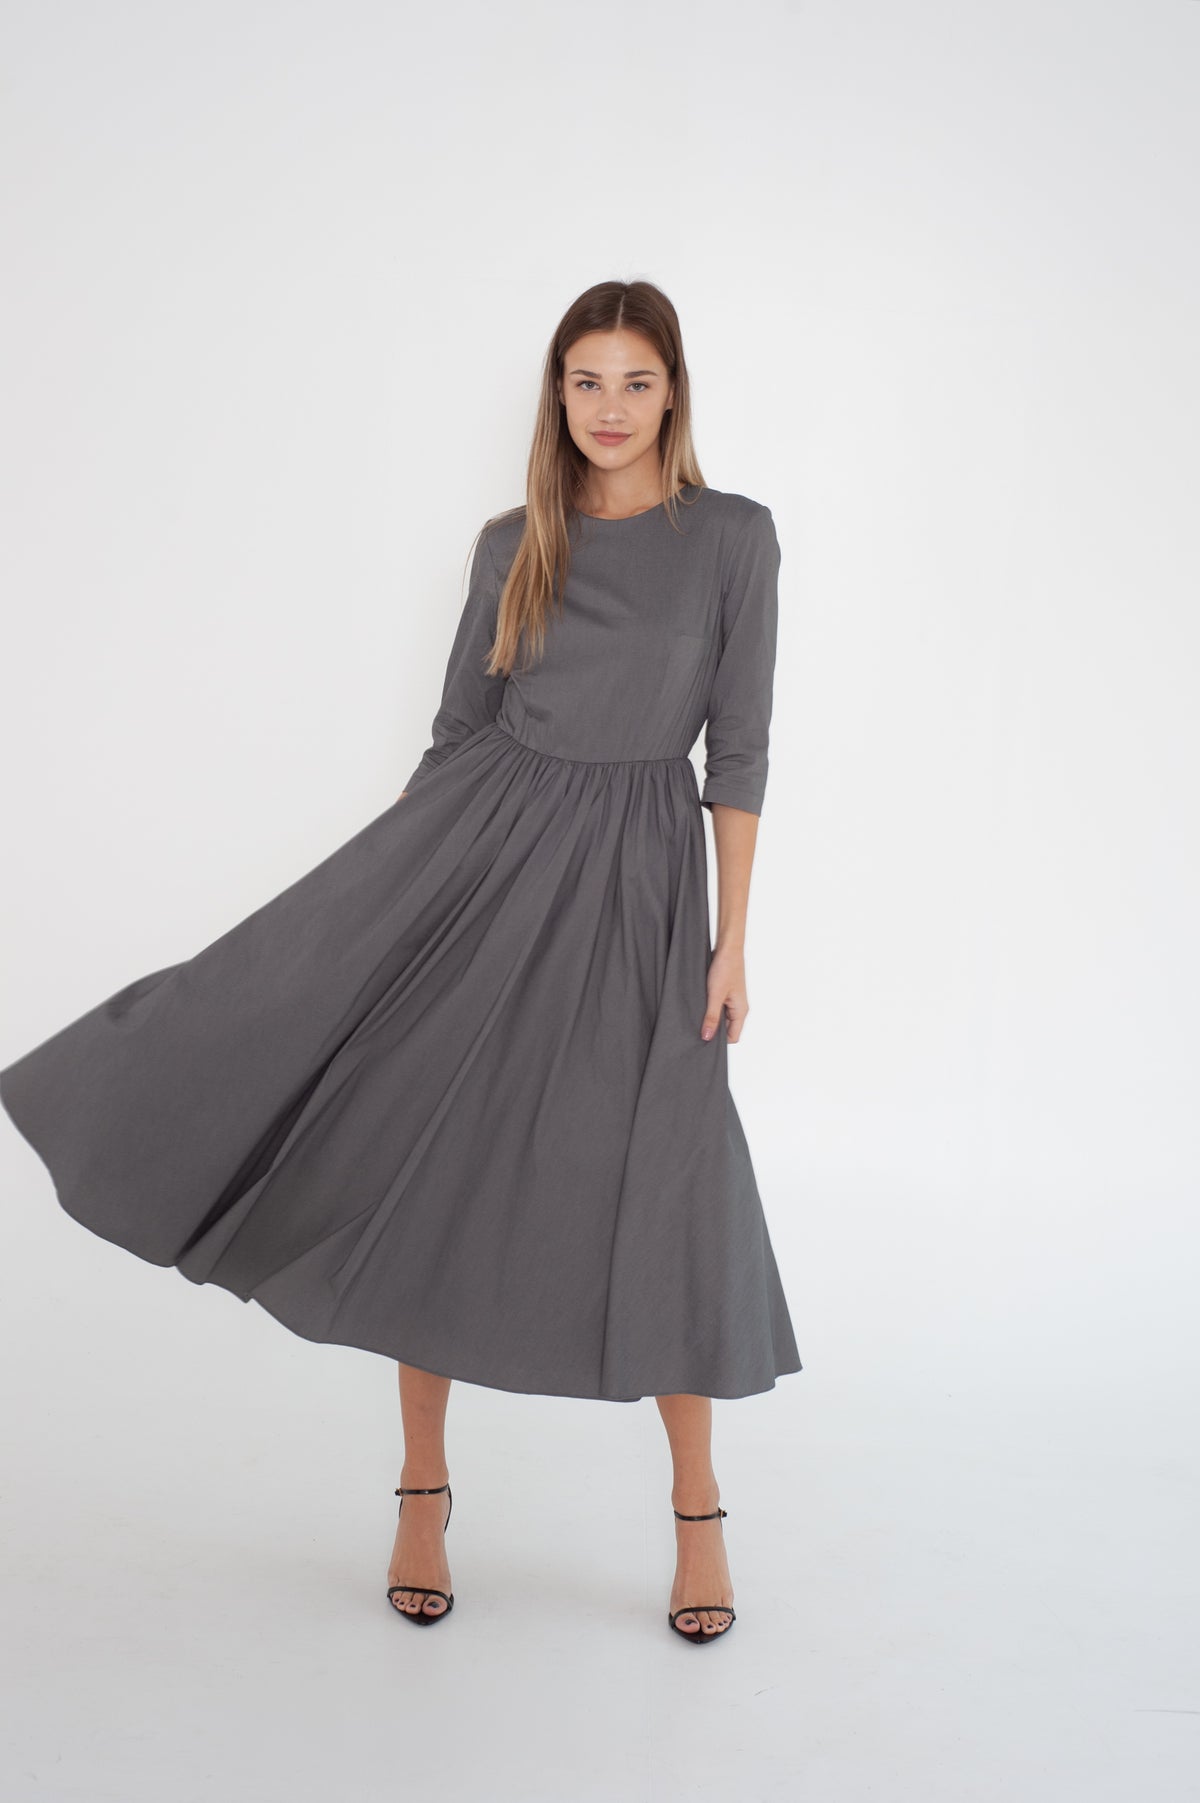 Classy midi deep grey formal dress